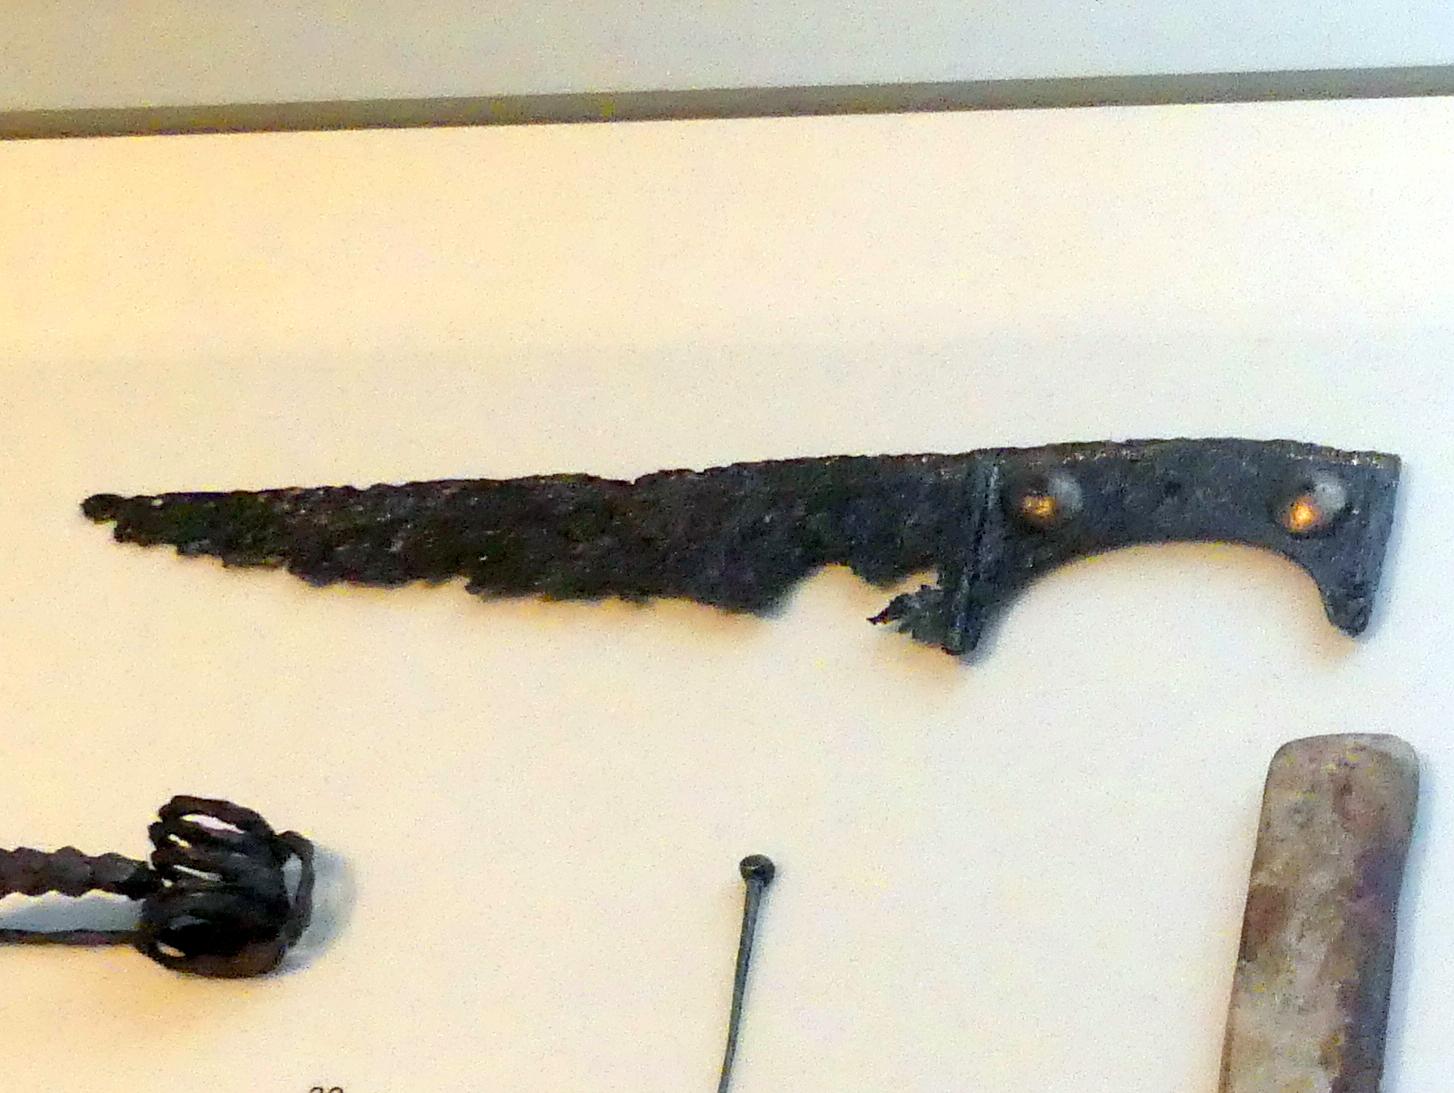 Messer, Frühlatènezeit A, 700 - 100 v. Chr., Bild 1/2